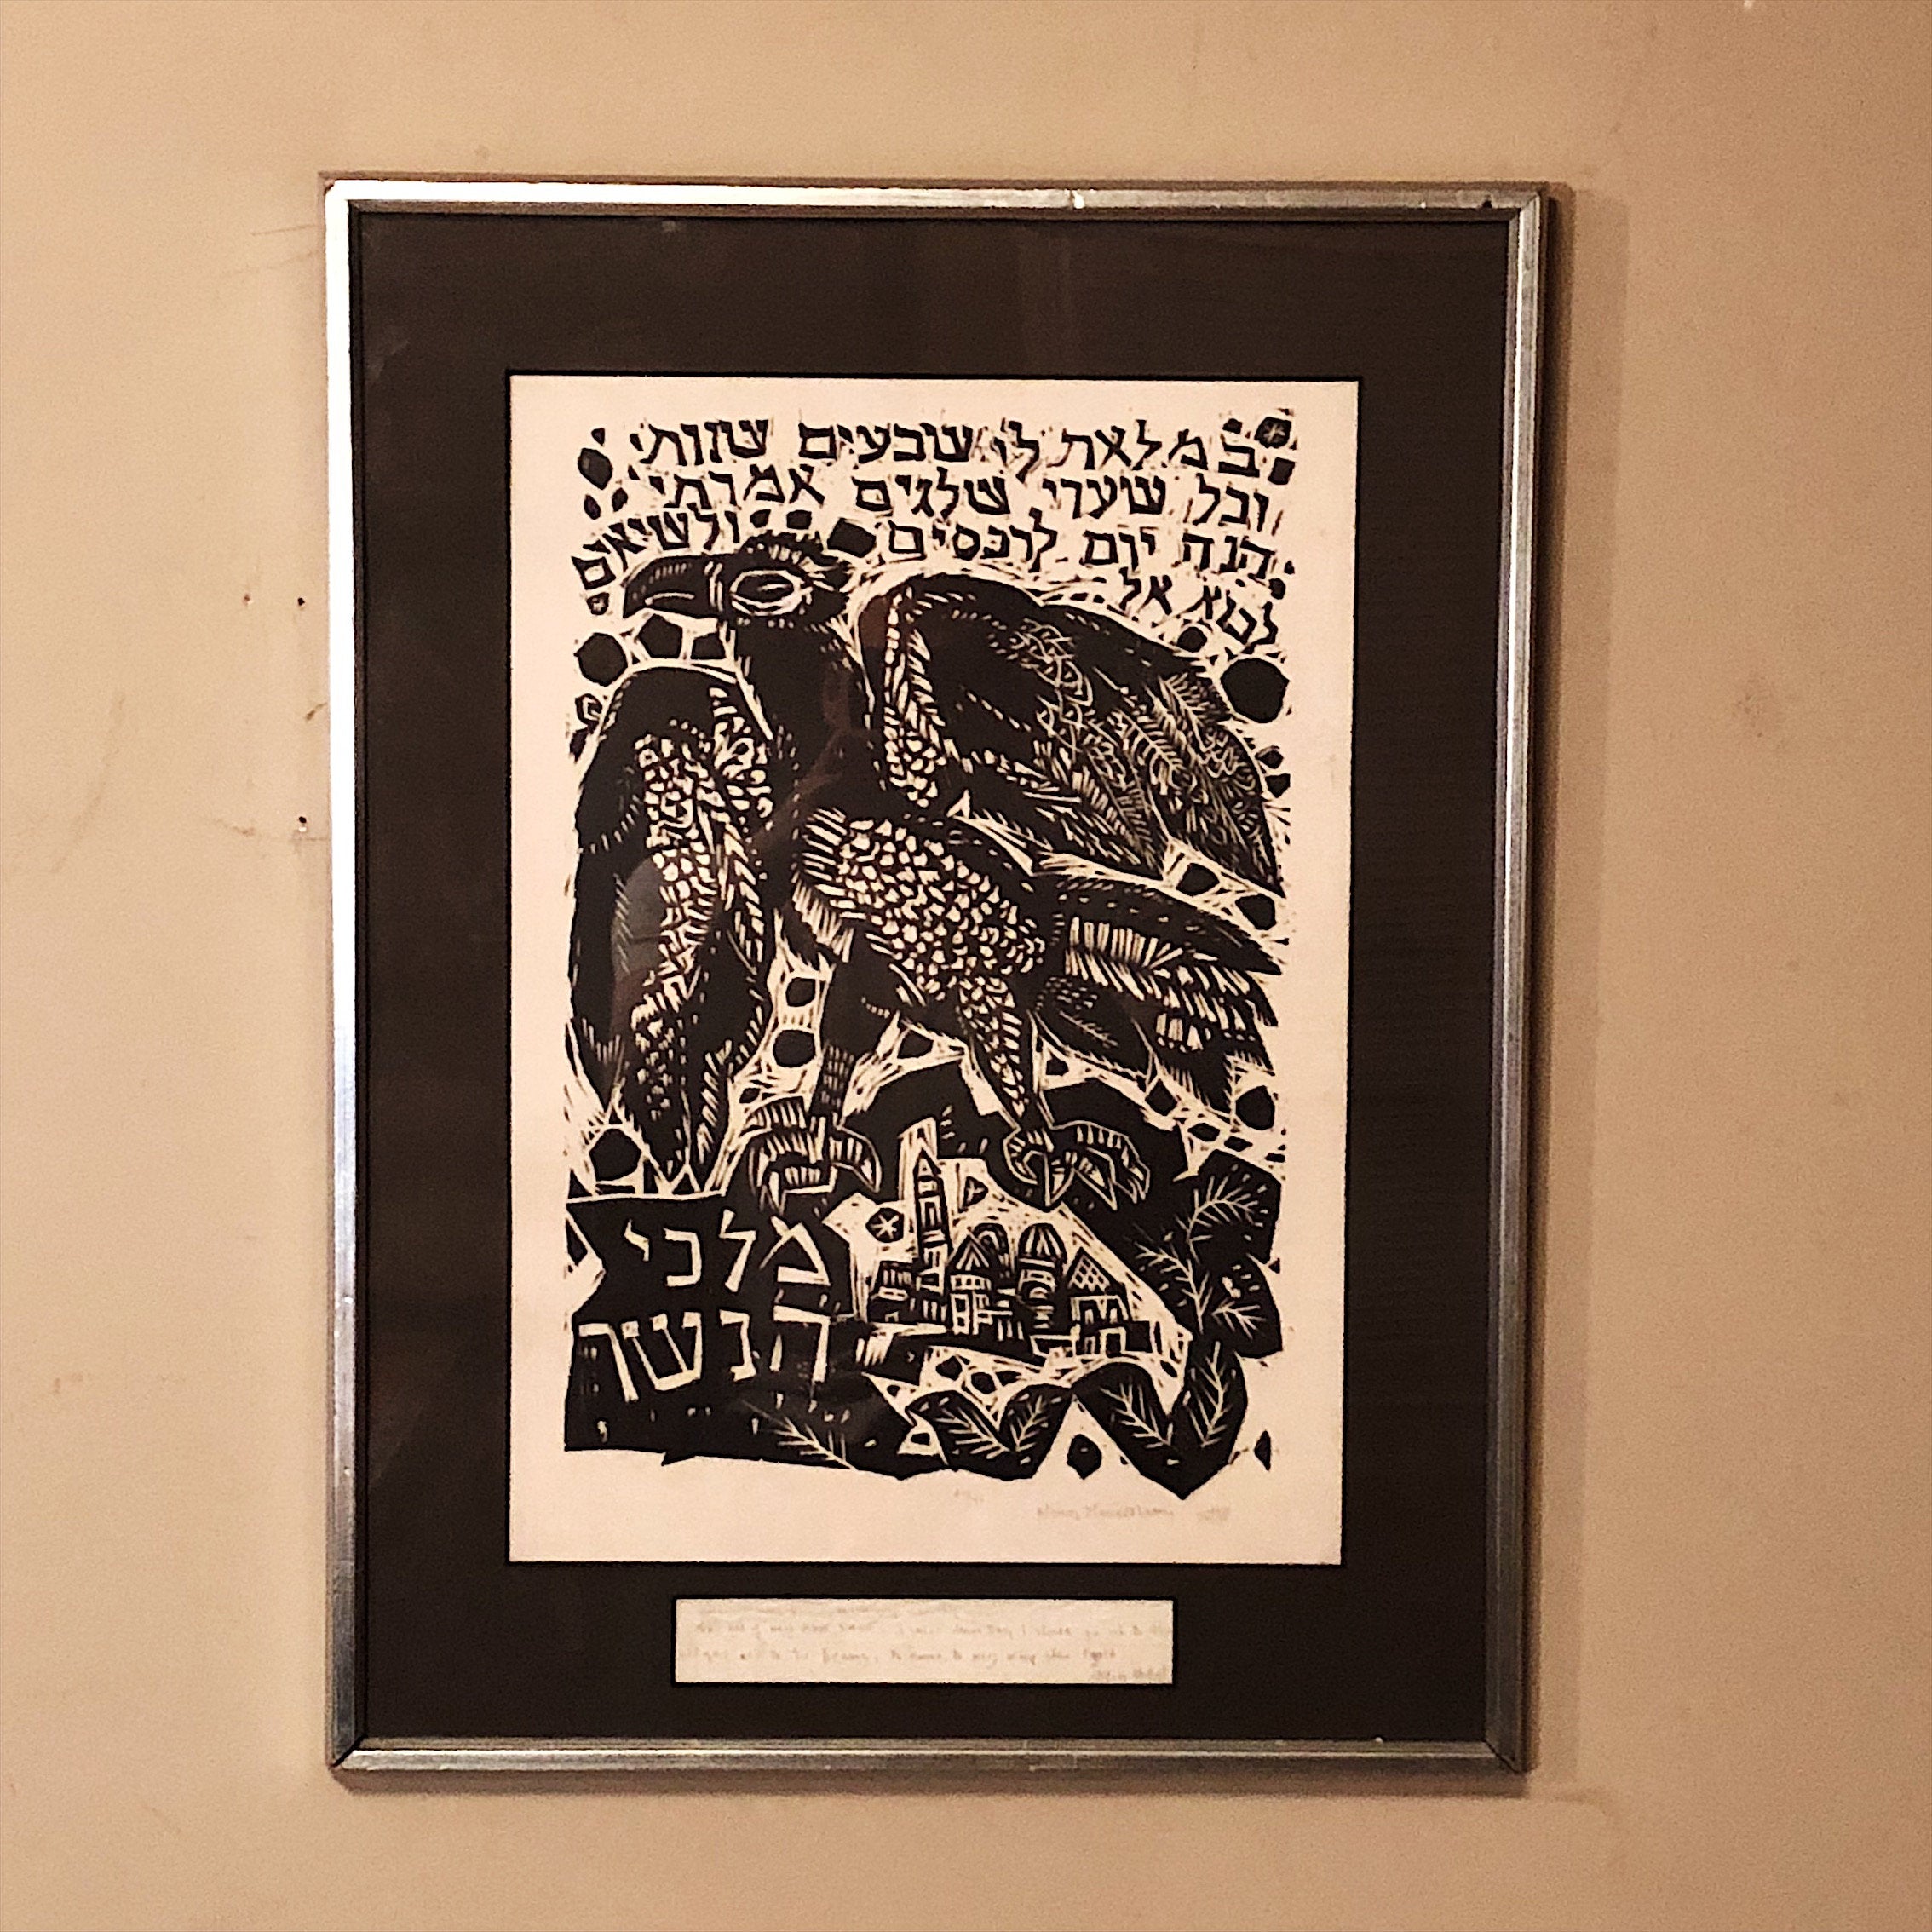 Nikos Stavroulakis Woodcut with Ayin Hillel Inscription - To The Eagle - 1970s- Rare Judaica Art - Jewish Art - Nicholas Stavroulakis Print